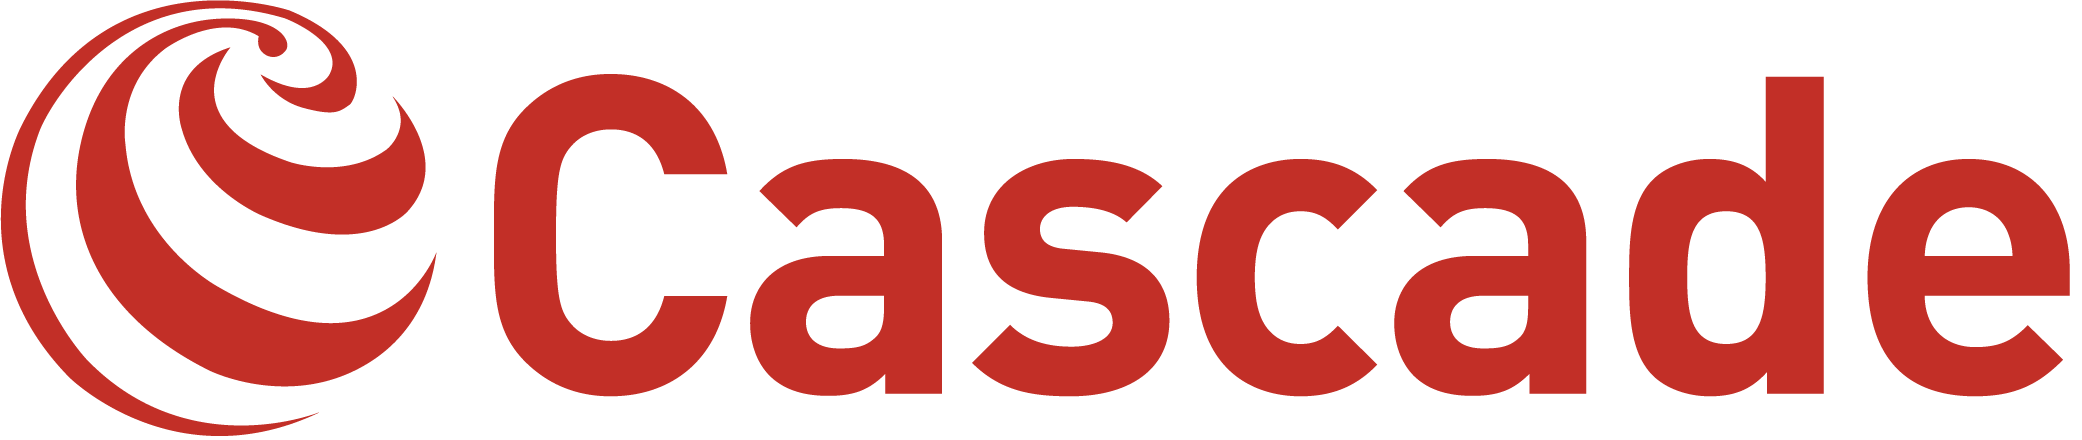 Cascad. Cascade логотип. Cascade logo. Logo Cascade без фона. Cascad conslatance.